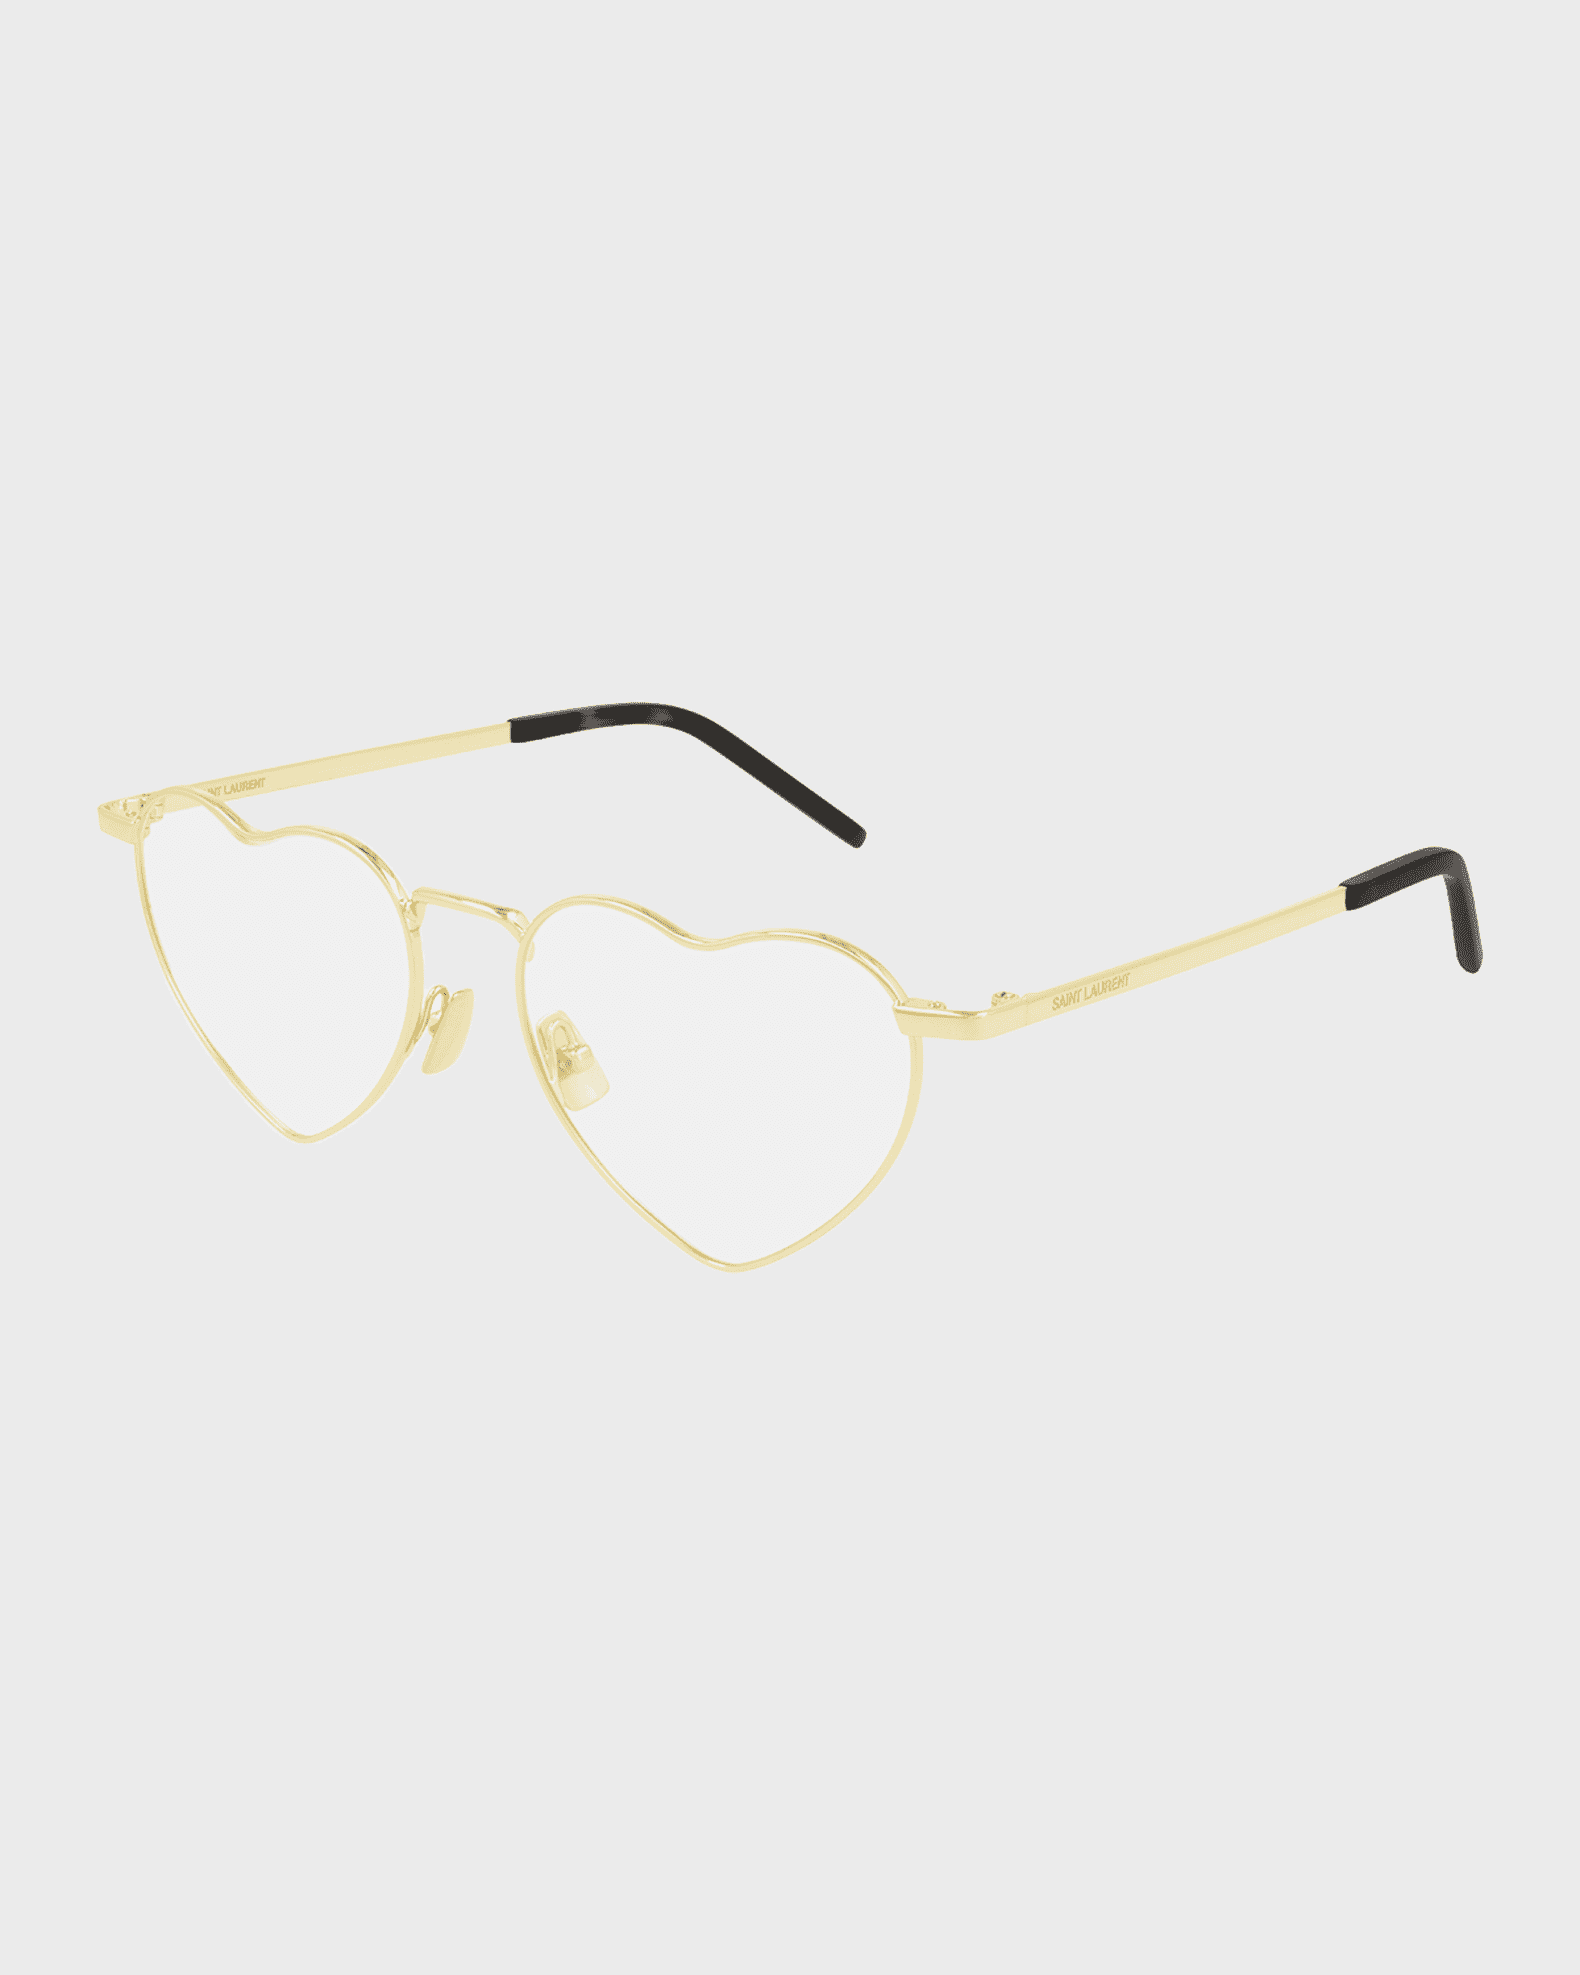 Saint Laurent Eyewear Heart-Shaped Sunglasses - Black